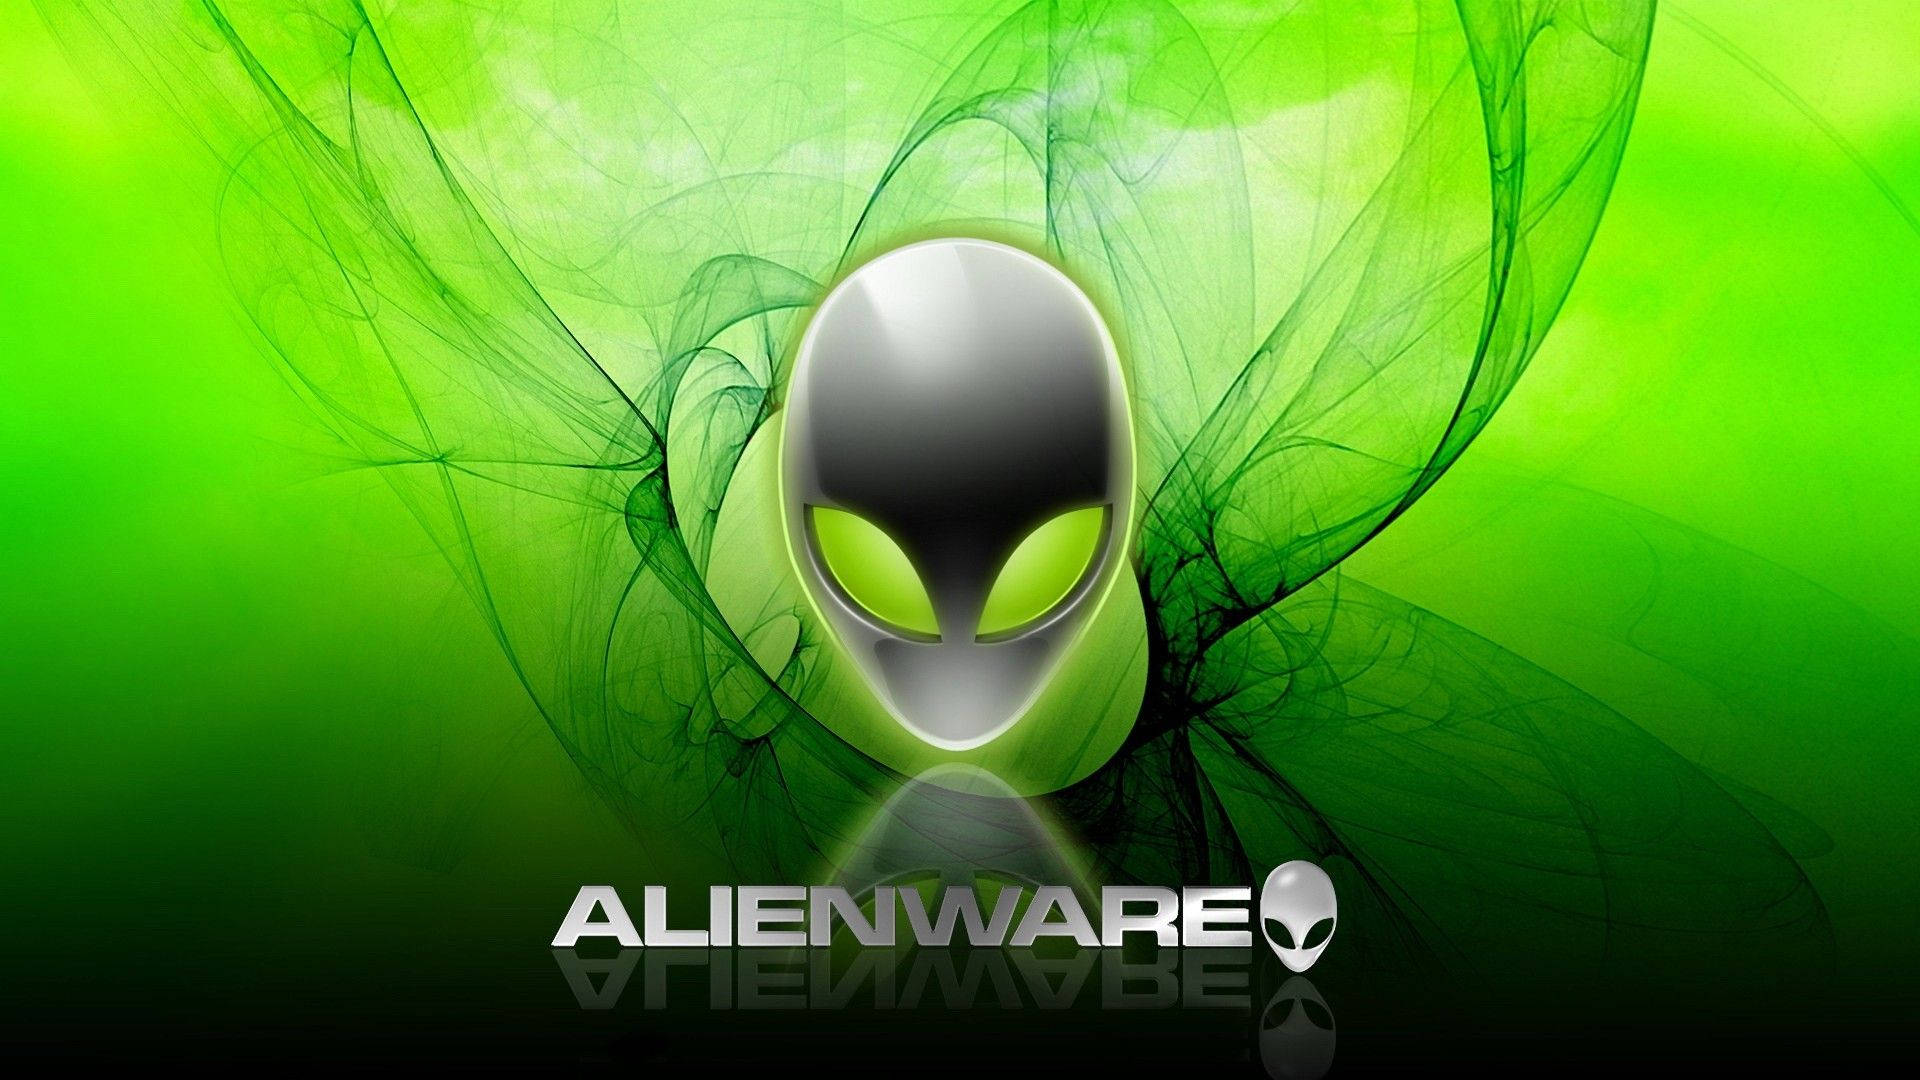 Free Alienware Wallpaper Downloads, [100+] Alienware Wallpapers for FREE |  